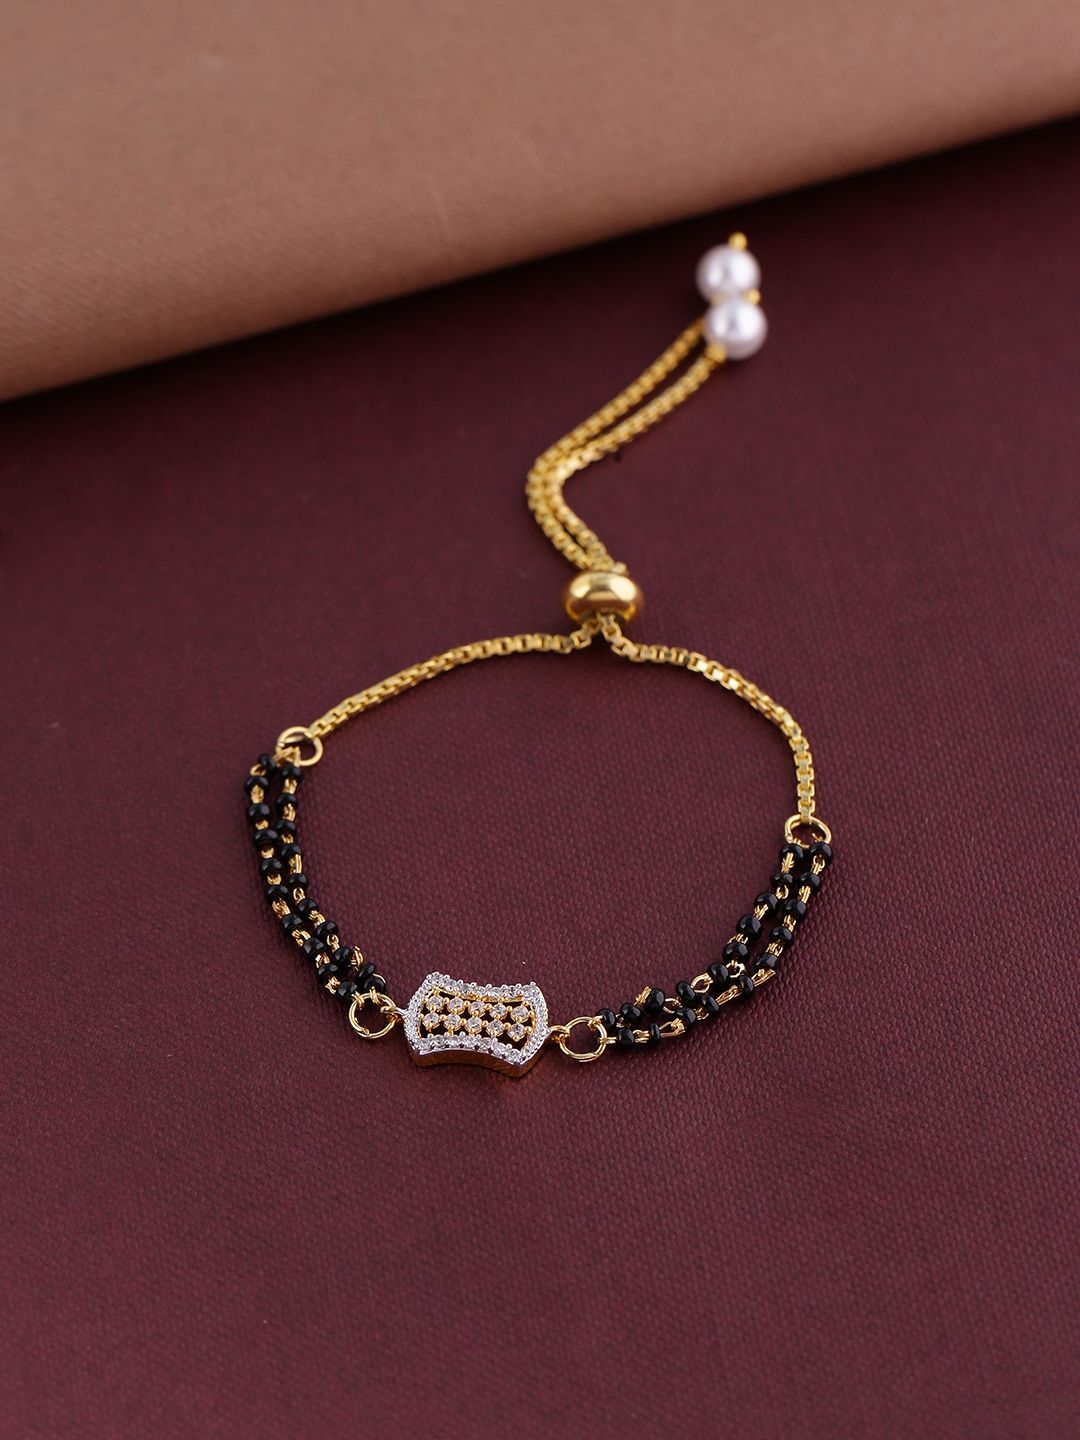 Shoshaa Black Bracelet Gold-Plated Handcrafted Mangalsutra Wraparound Bracelet Price in India